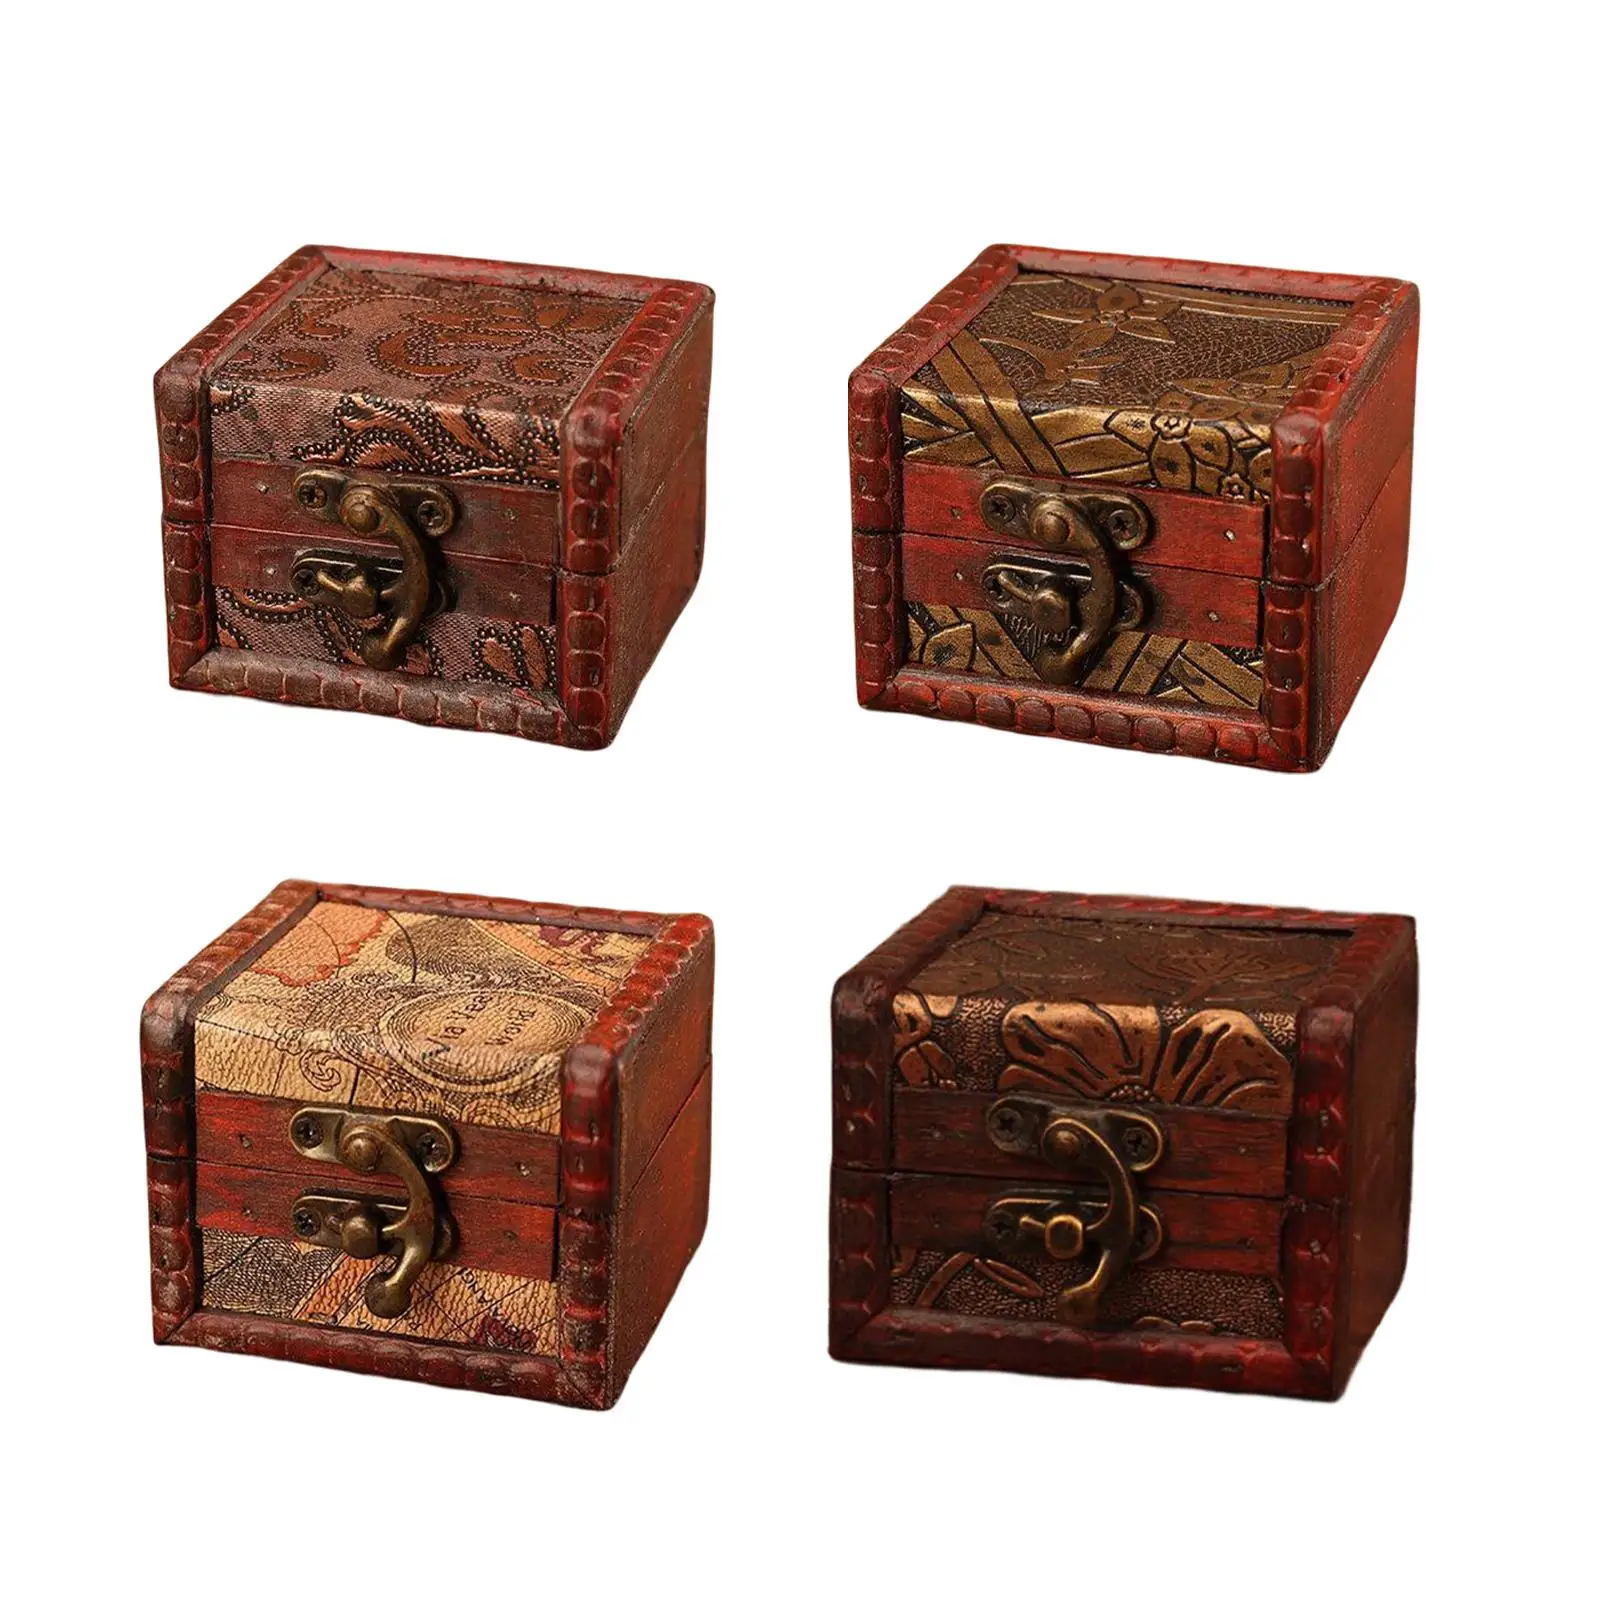 Rustic Wooden Jewelry Box Organizer Lockable Storage Box Jewellery Trinket Box for Watch Ear Studs Necklaces Cufflinks Ring